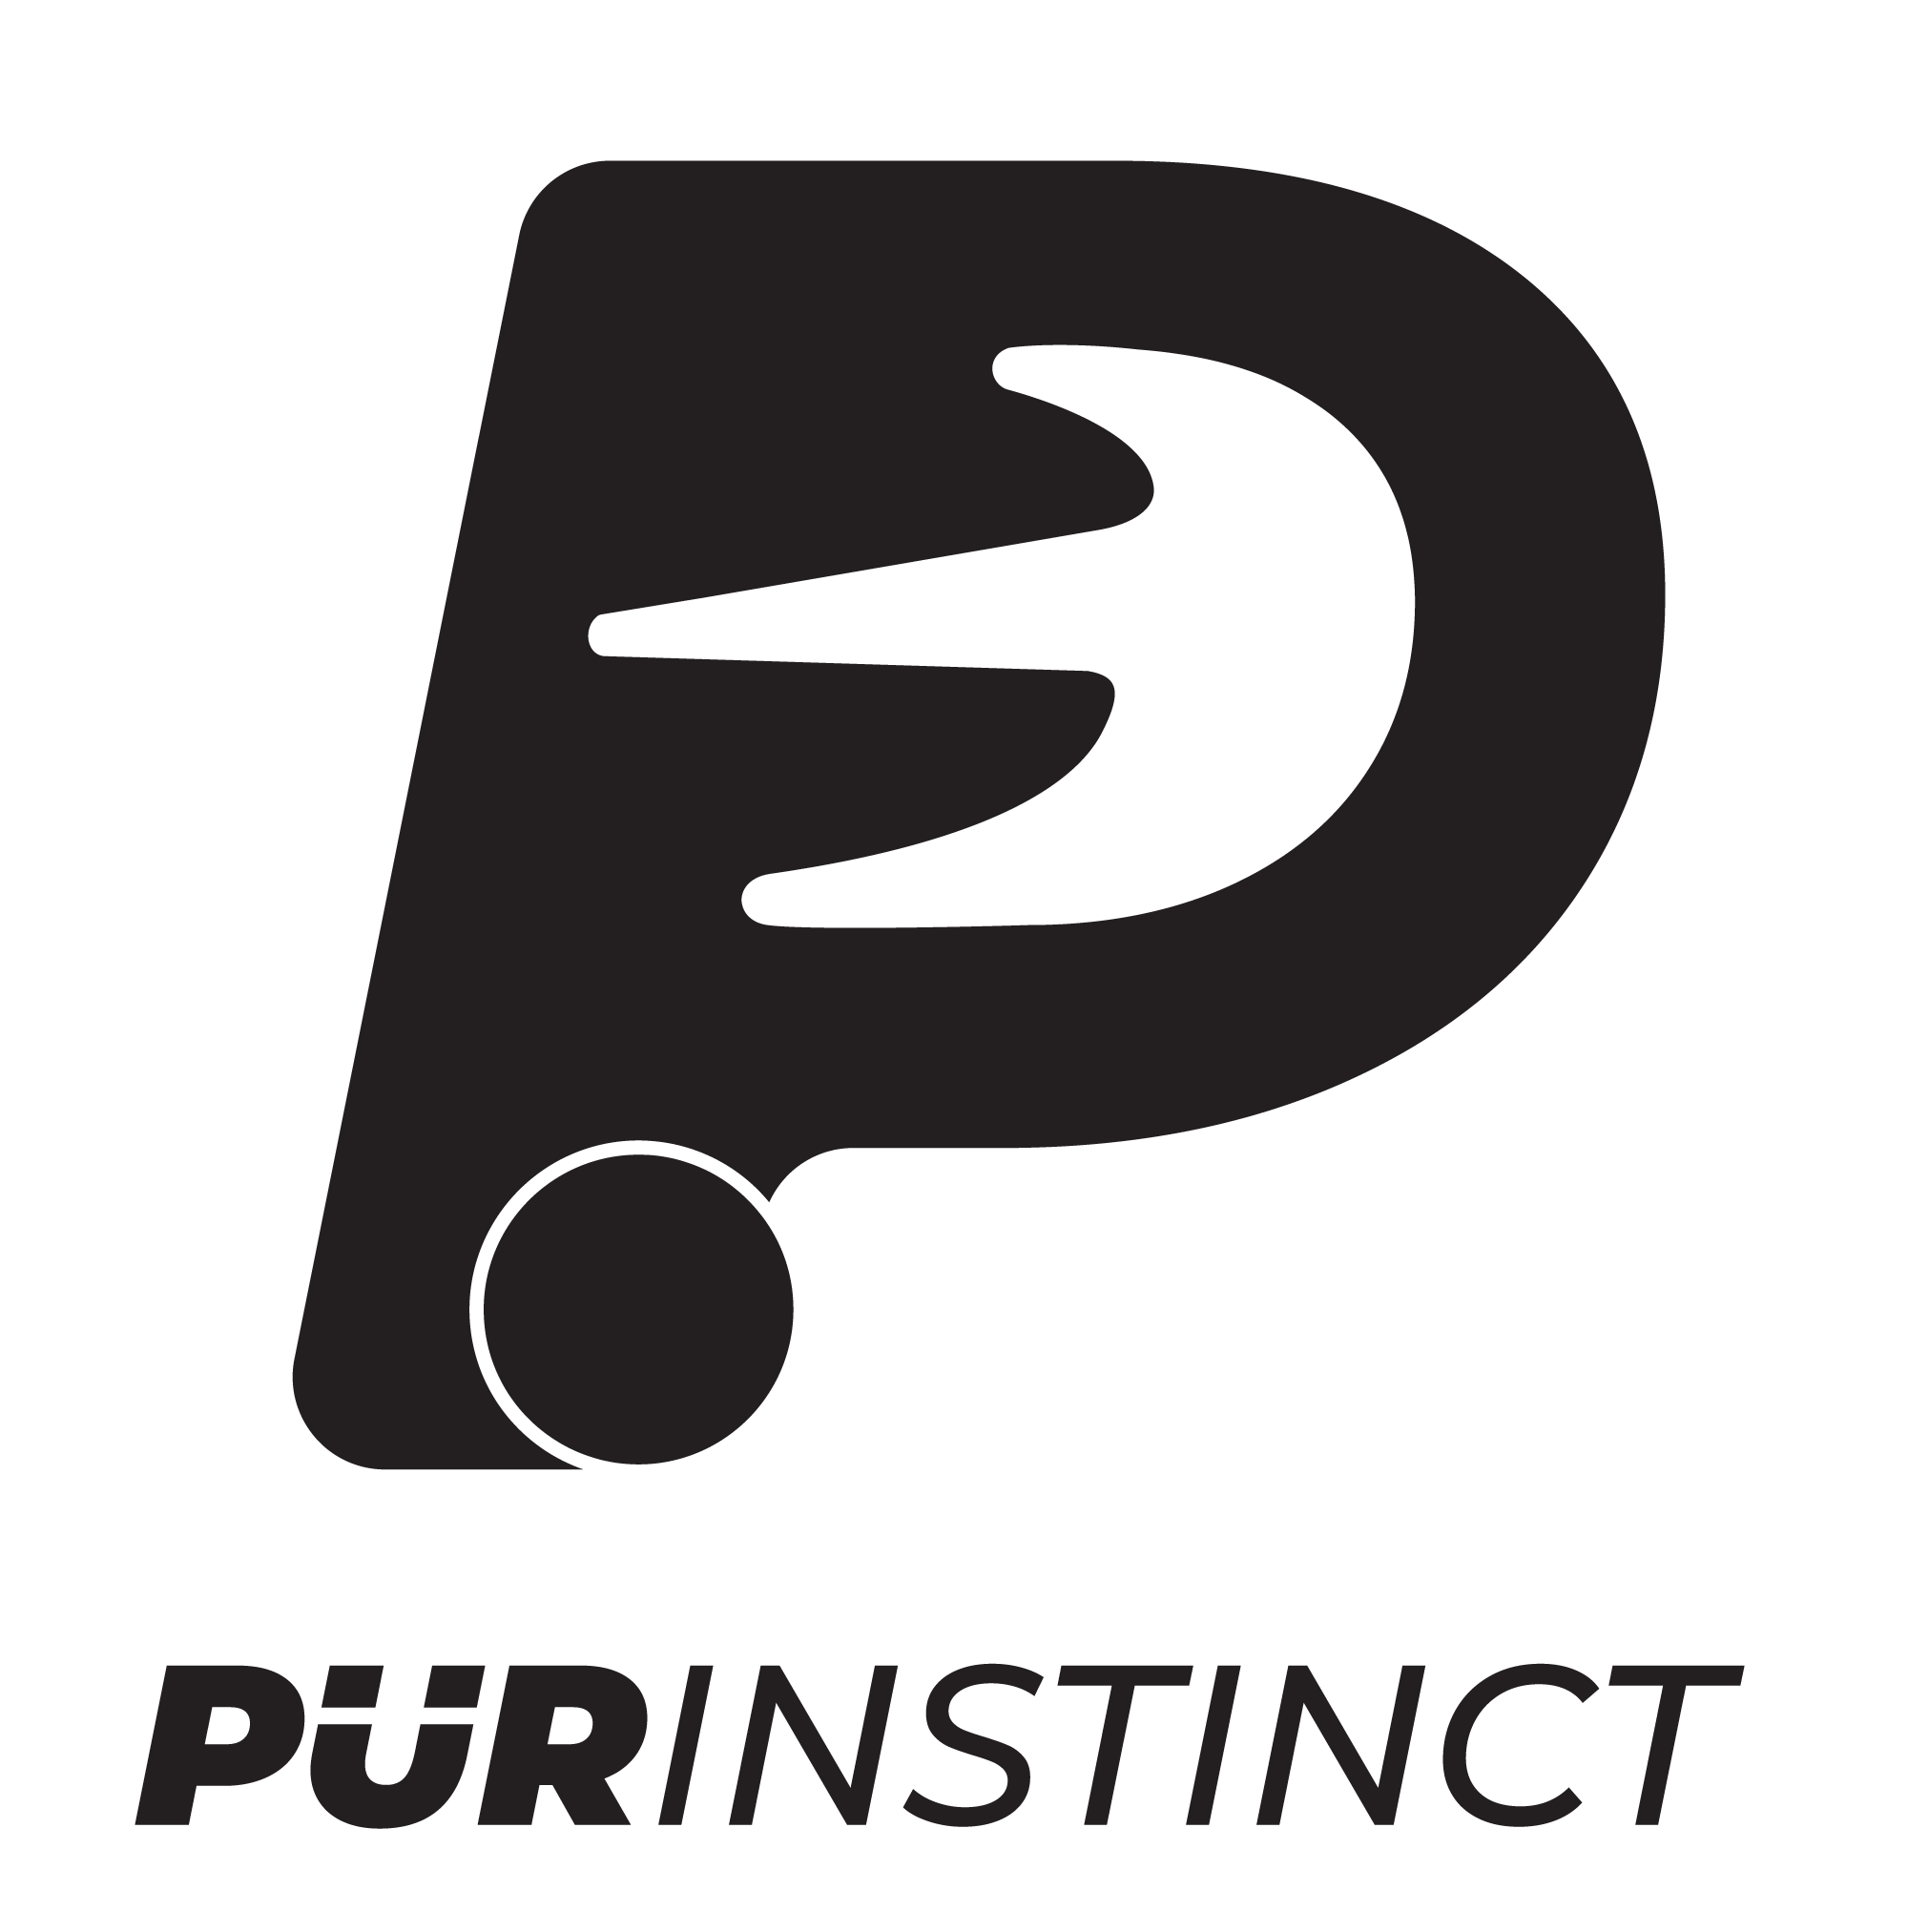 PurInstinct